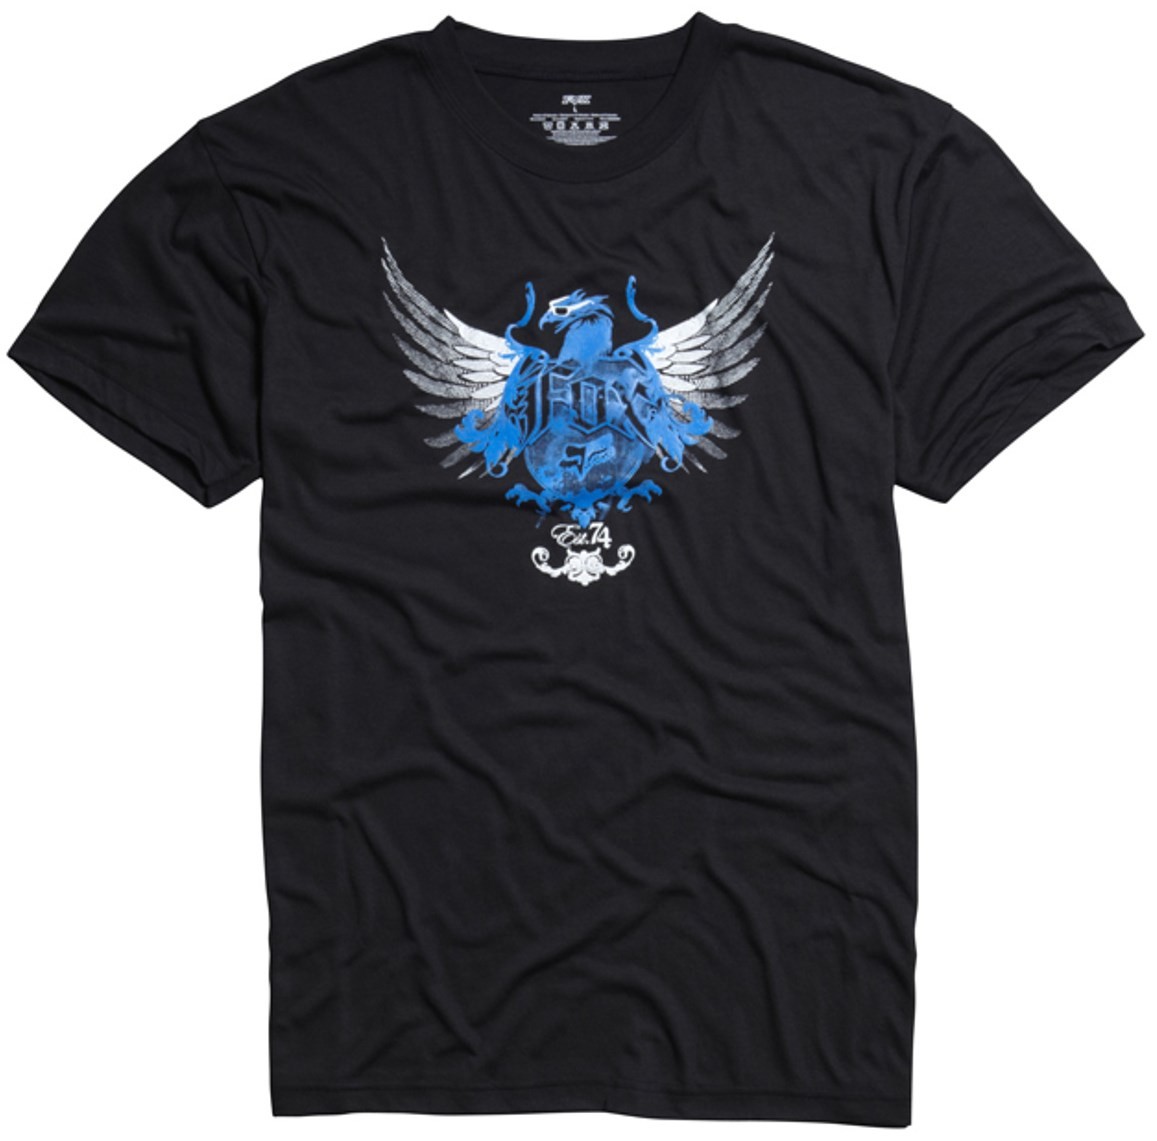 Fox Clothing Phoenix Dirt T-Shirt